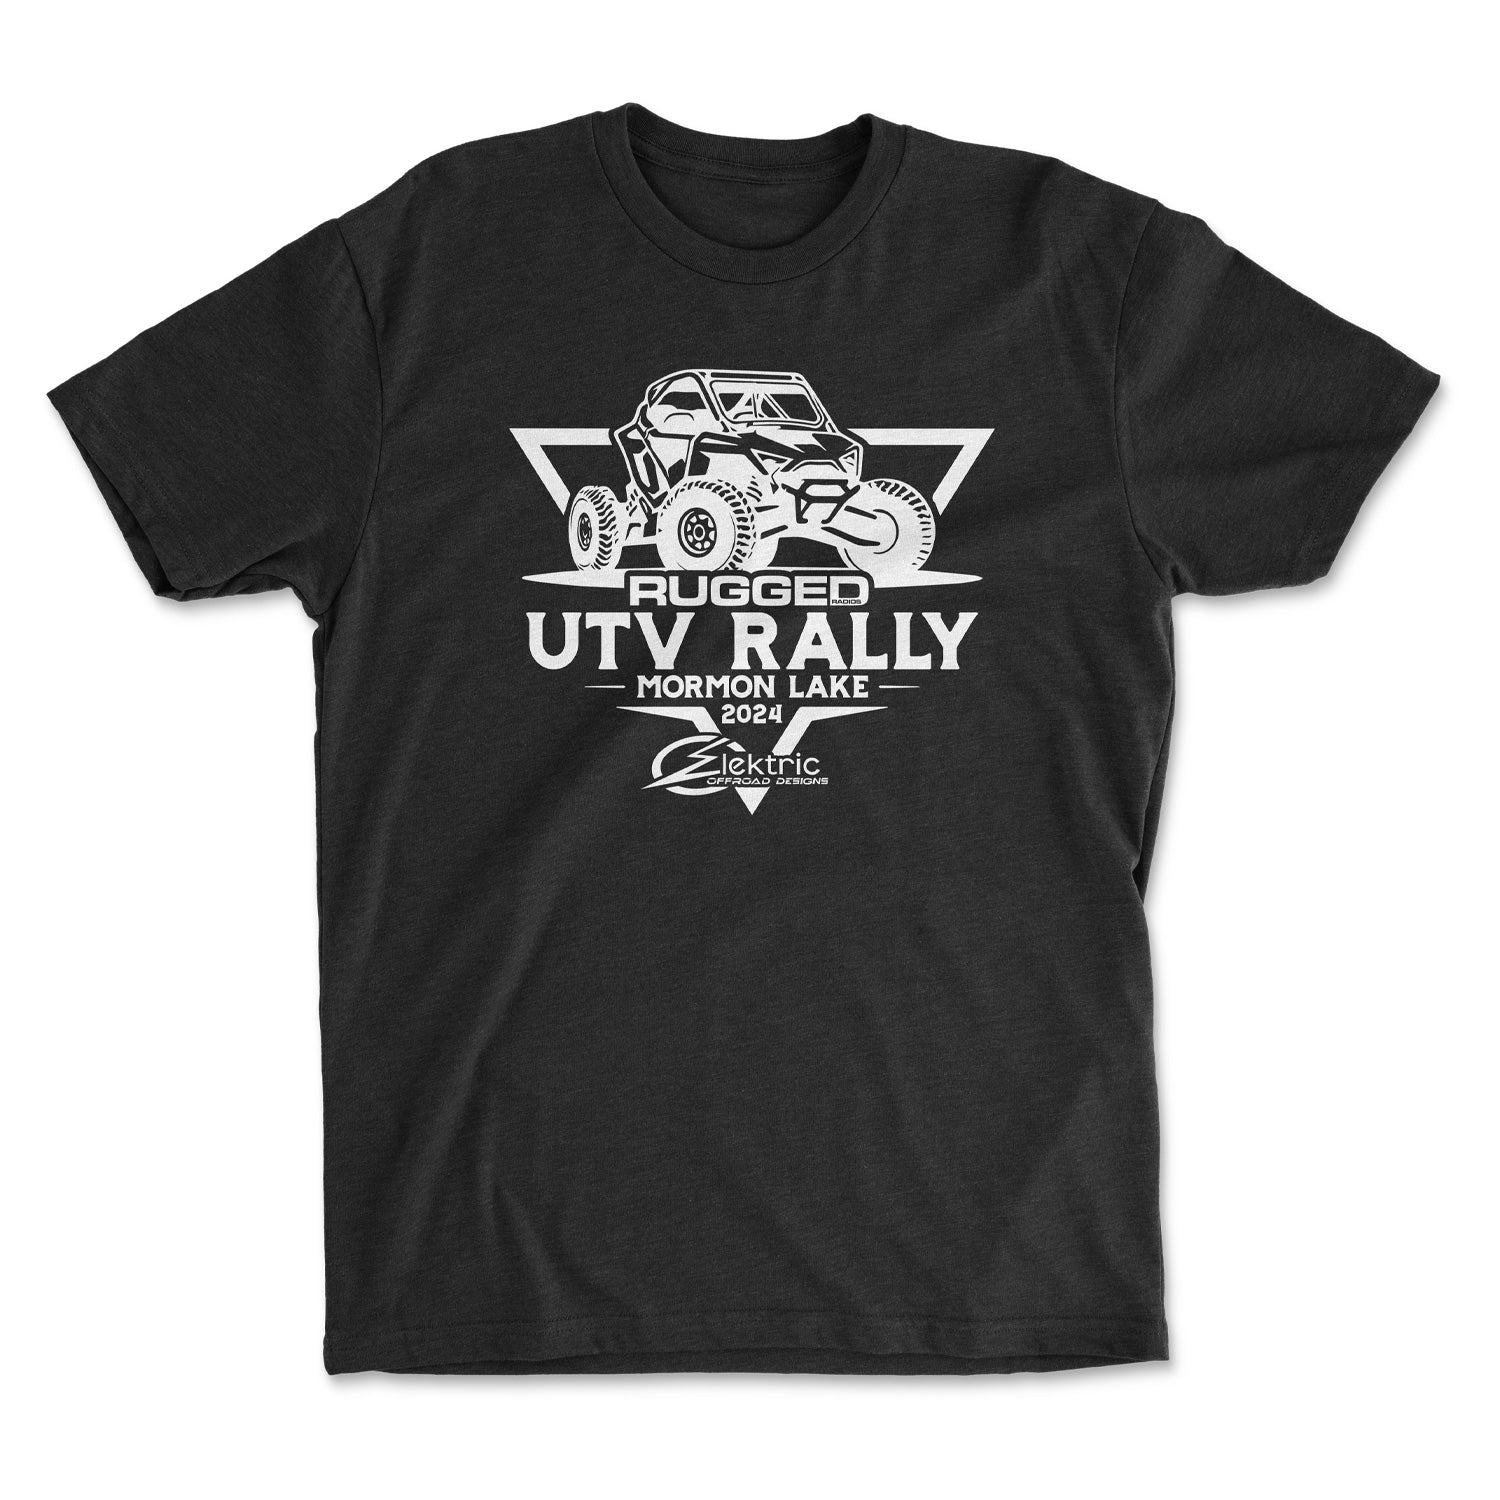 2024 UTV Rally Limited Edition T-Shirt